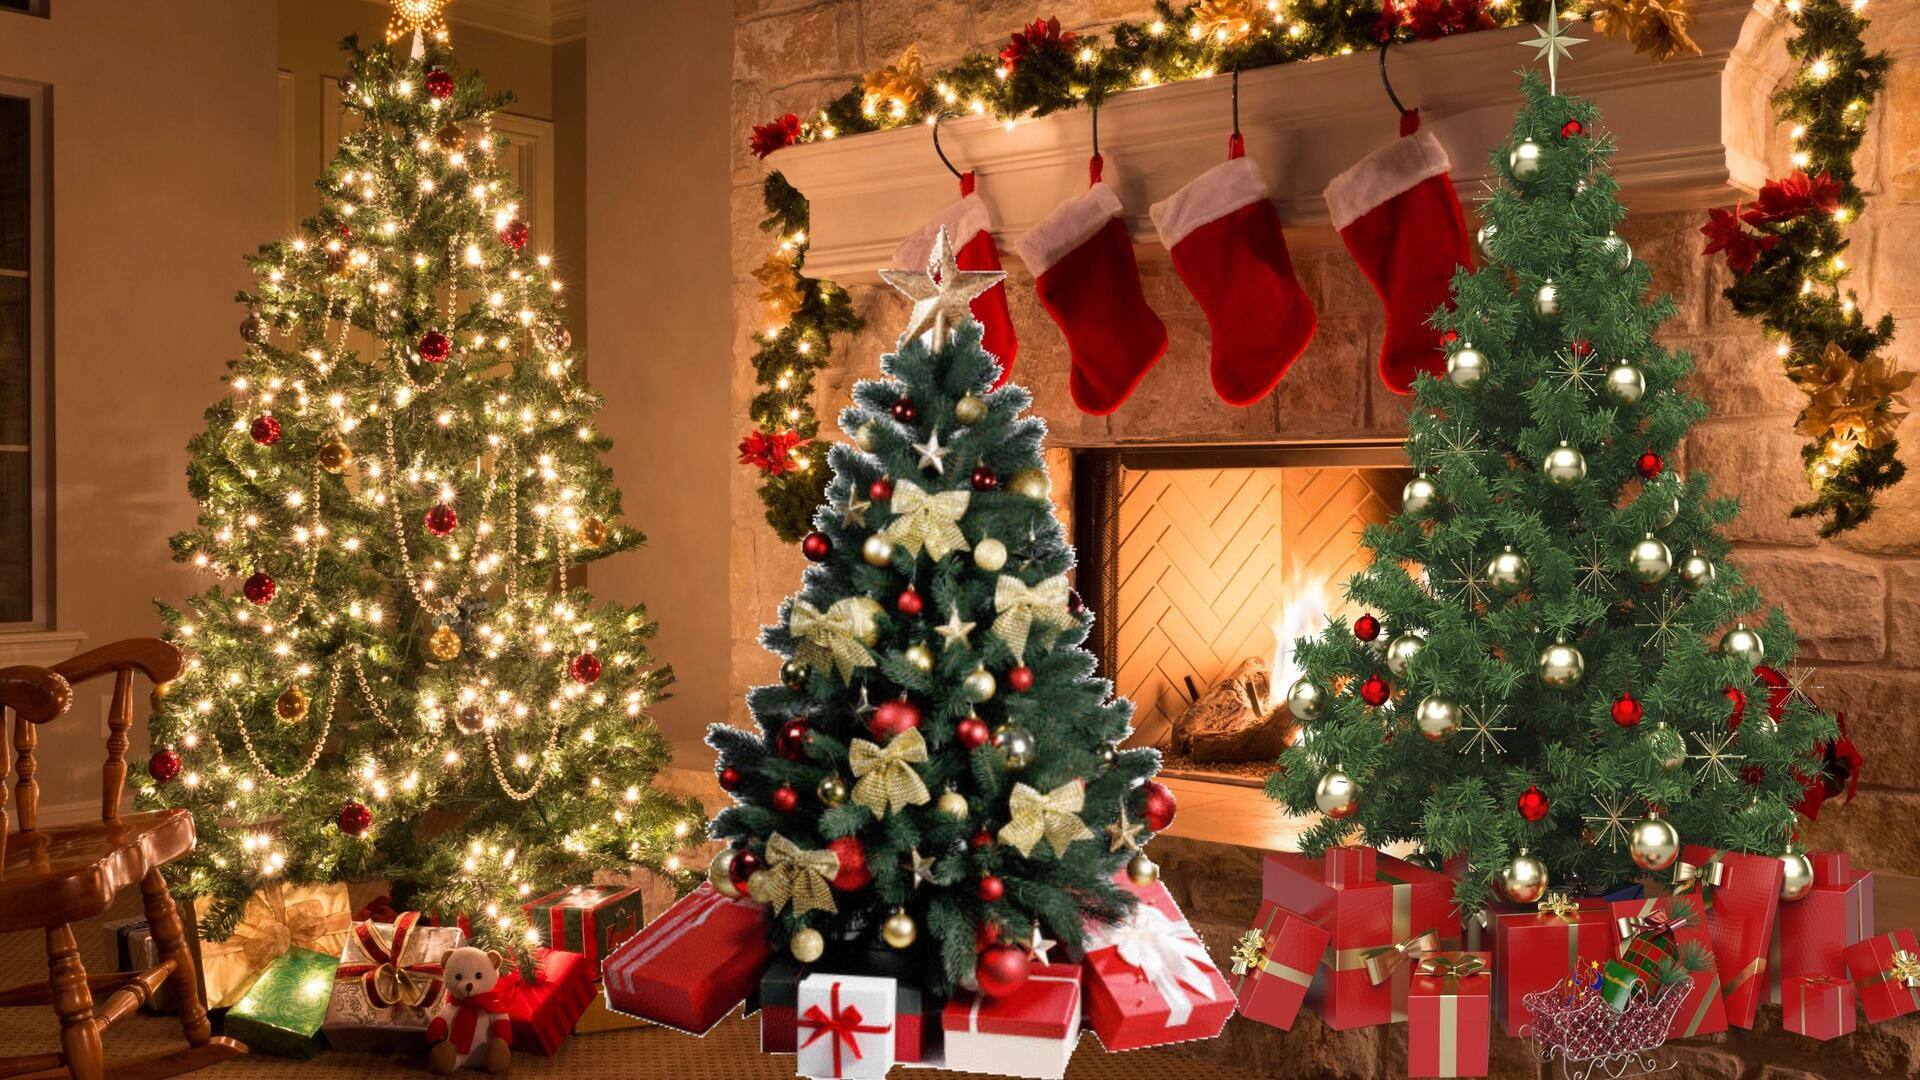 Christmas Tree Decoration: ఈ చిట్కాలతో క్రిస్మస్ చెట్టును ఈజీగా, చౌకగా అలంకరించుకోండి 